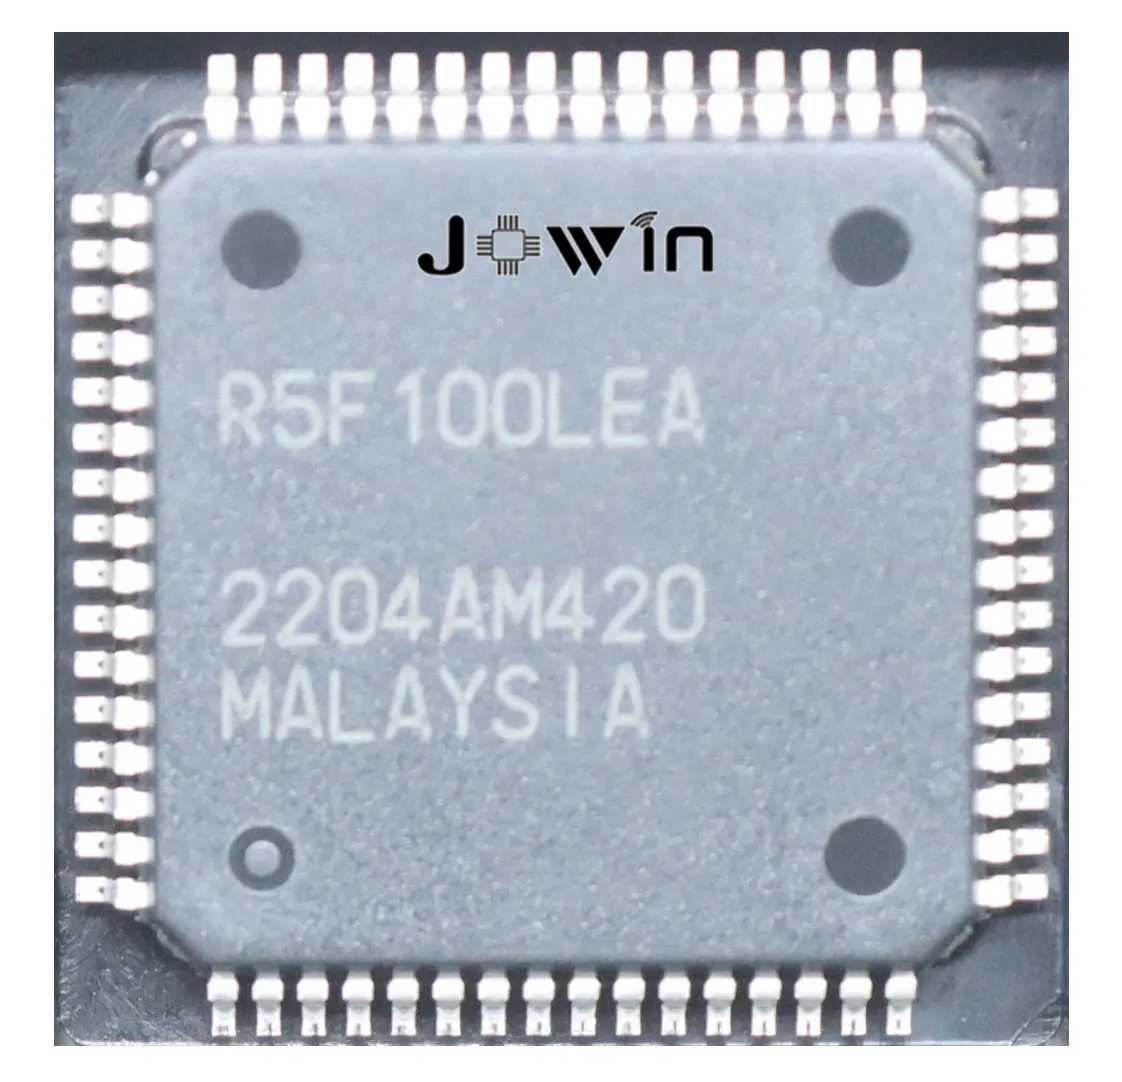 R5F100LEAFA New Original Microcontrollers RL78/G13 MCU 16-BIT 64KB LQFP-64 R5F100LEA